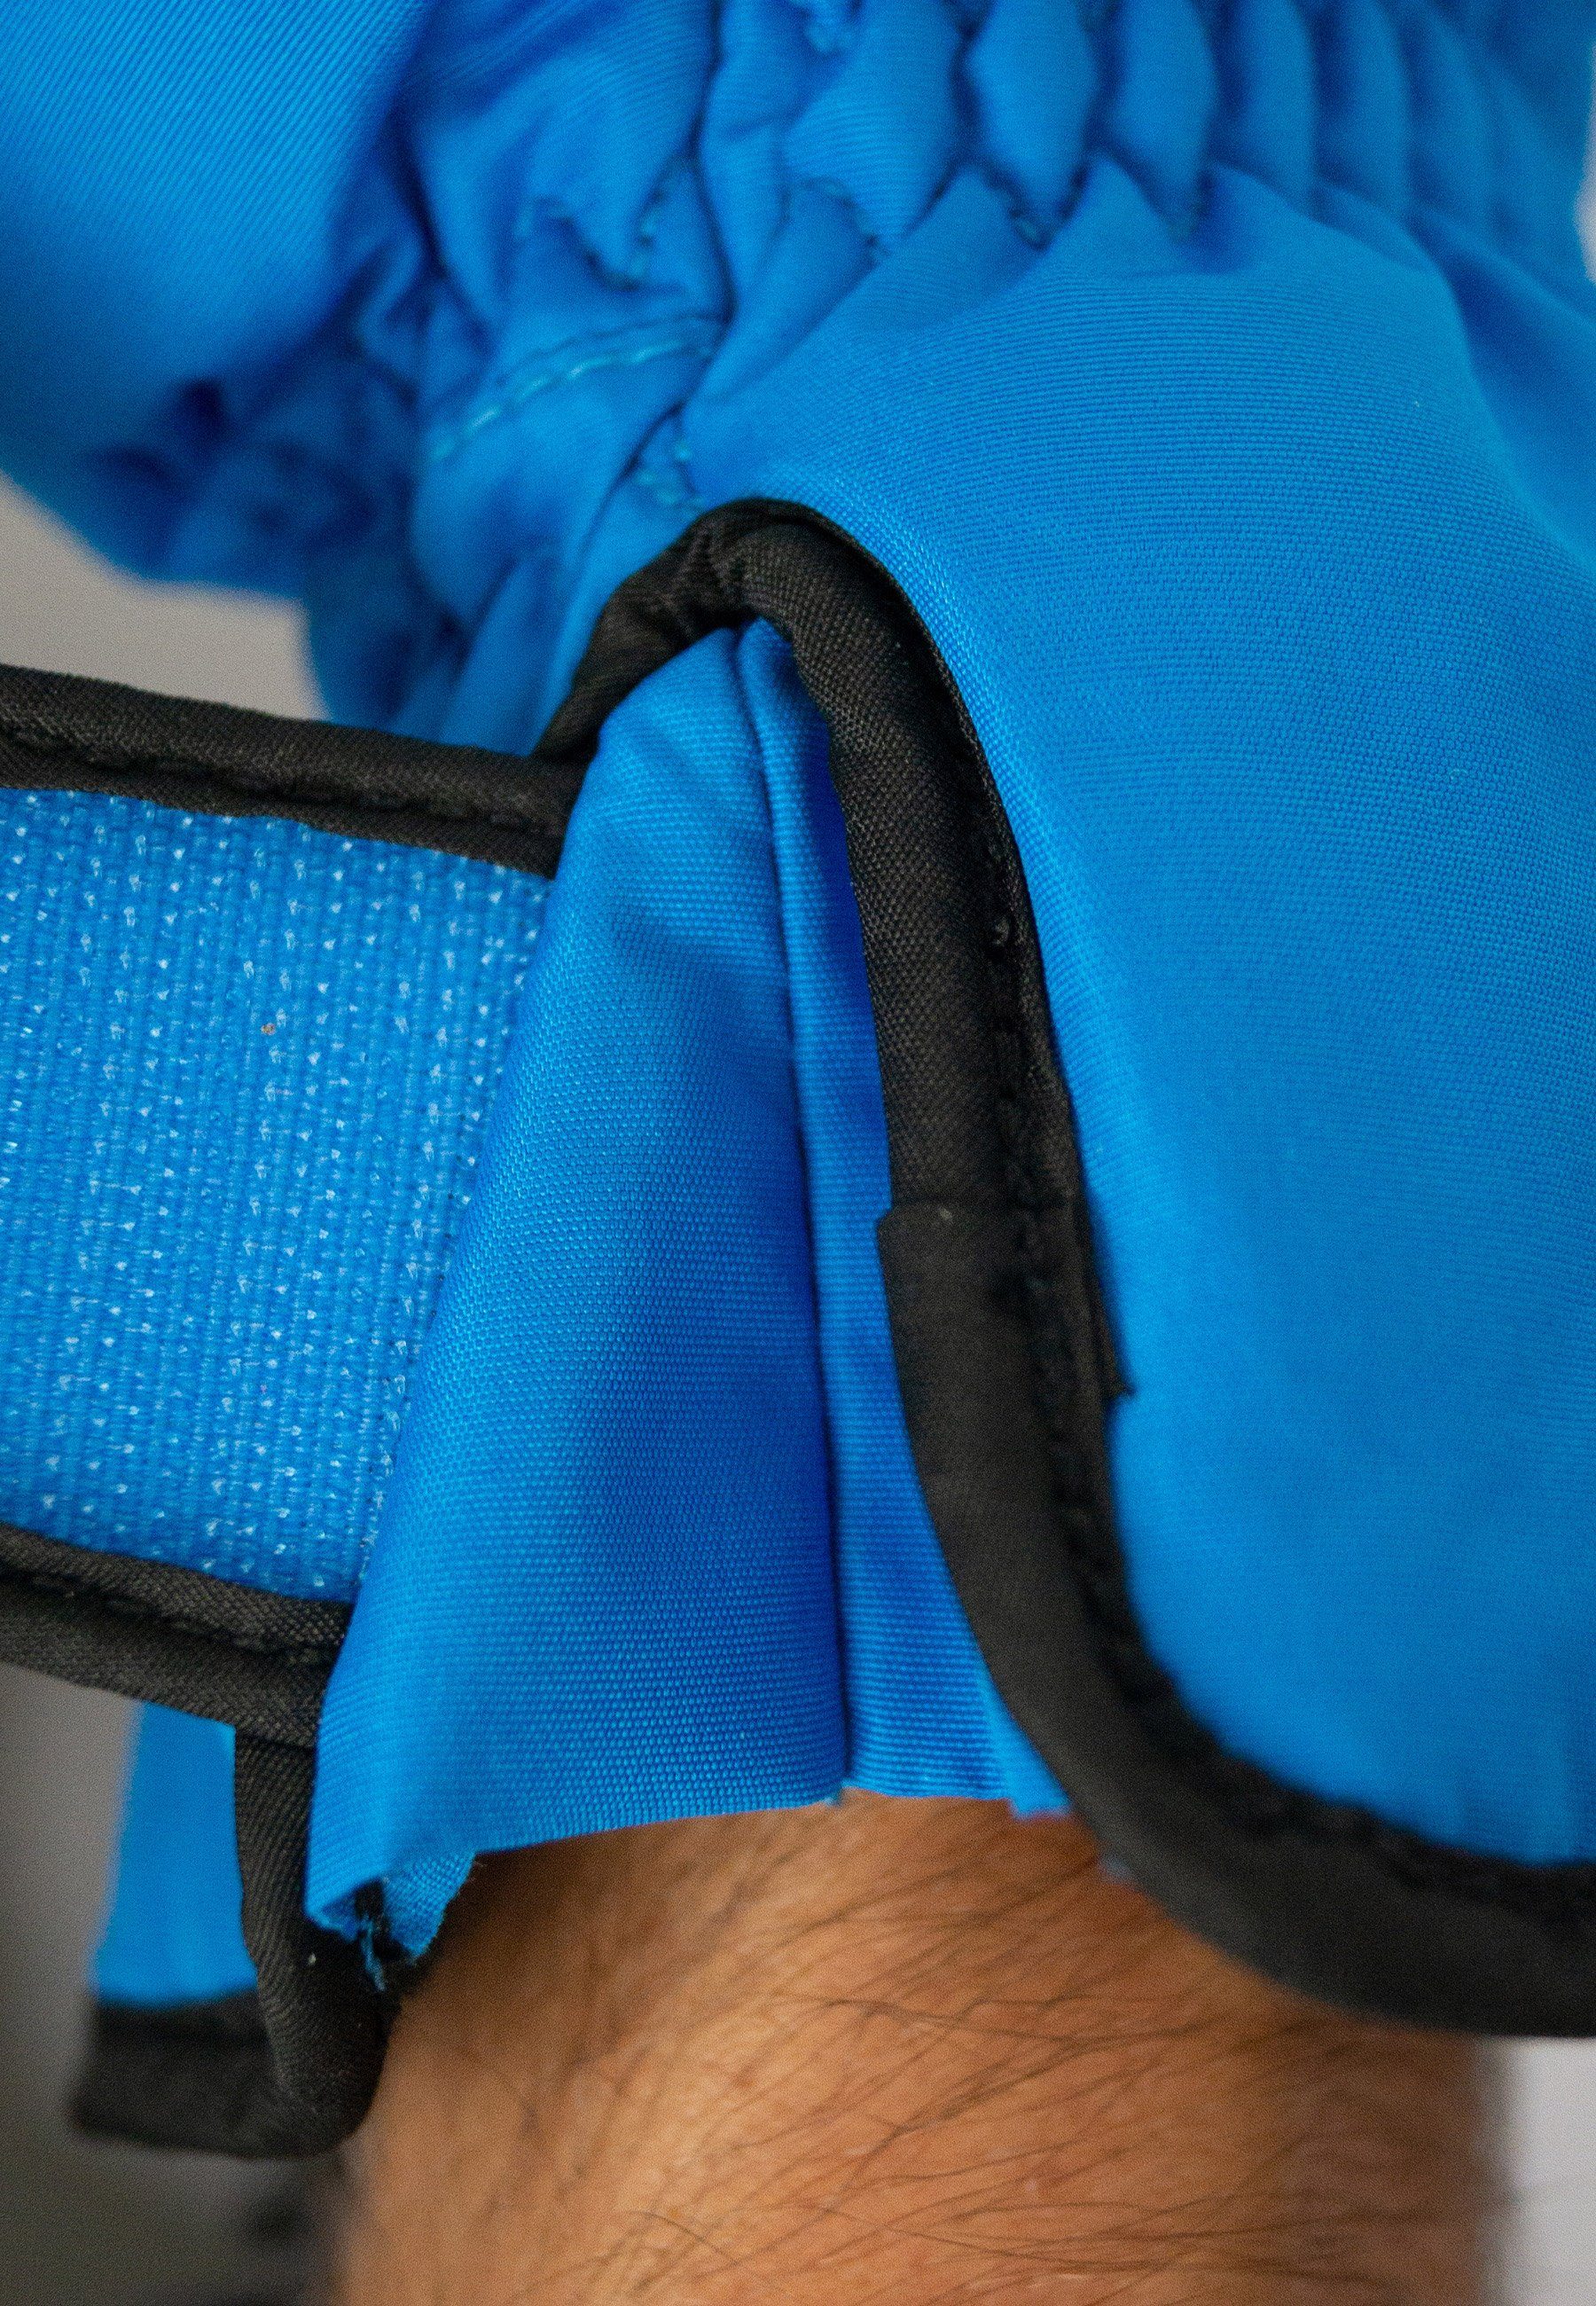 Reusch Skihandschuhe XT Bradley R-TEX® schickem blau-schwarz Design in